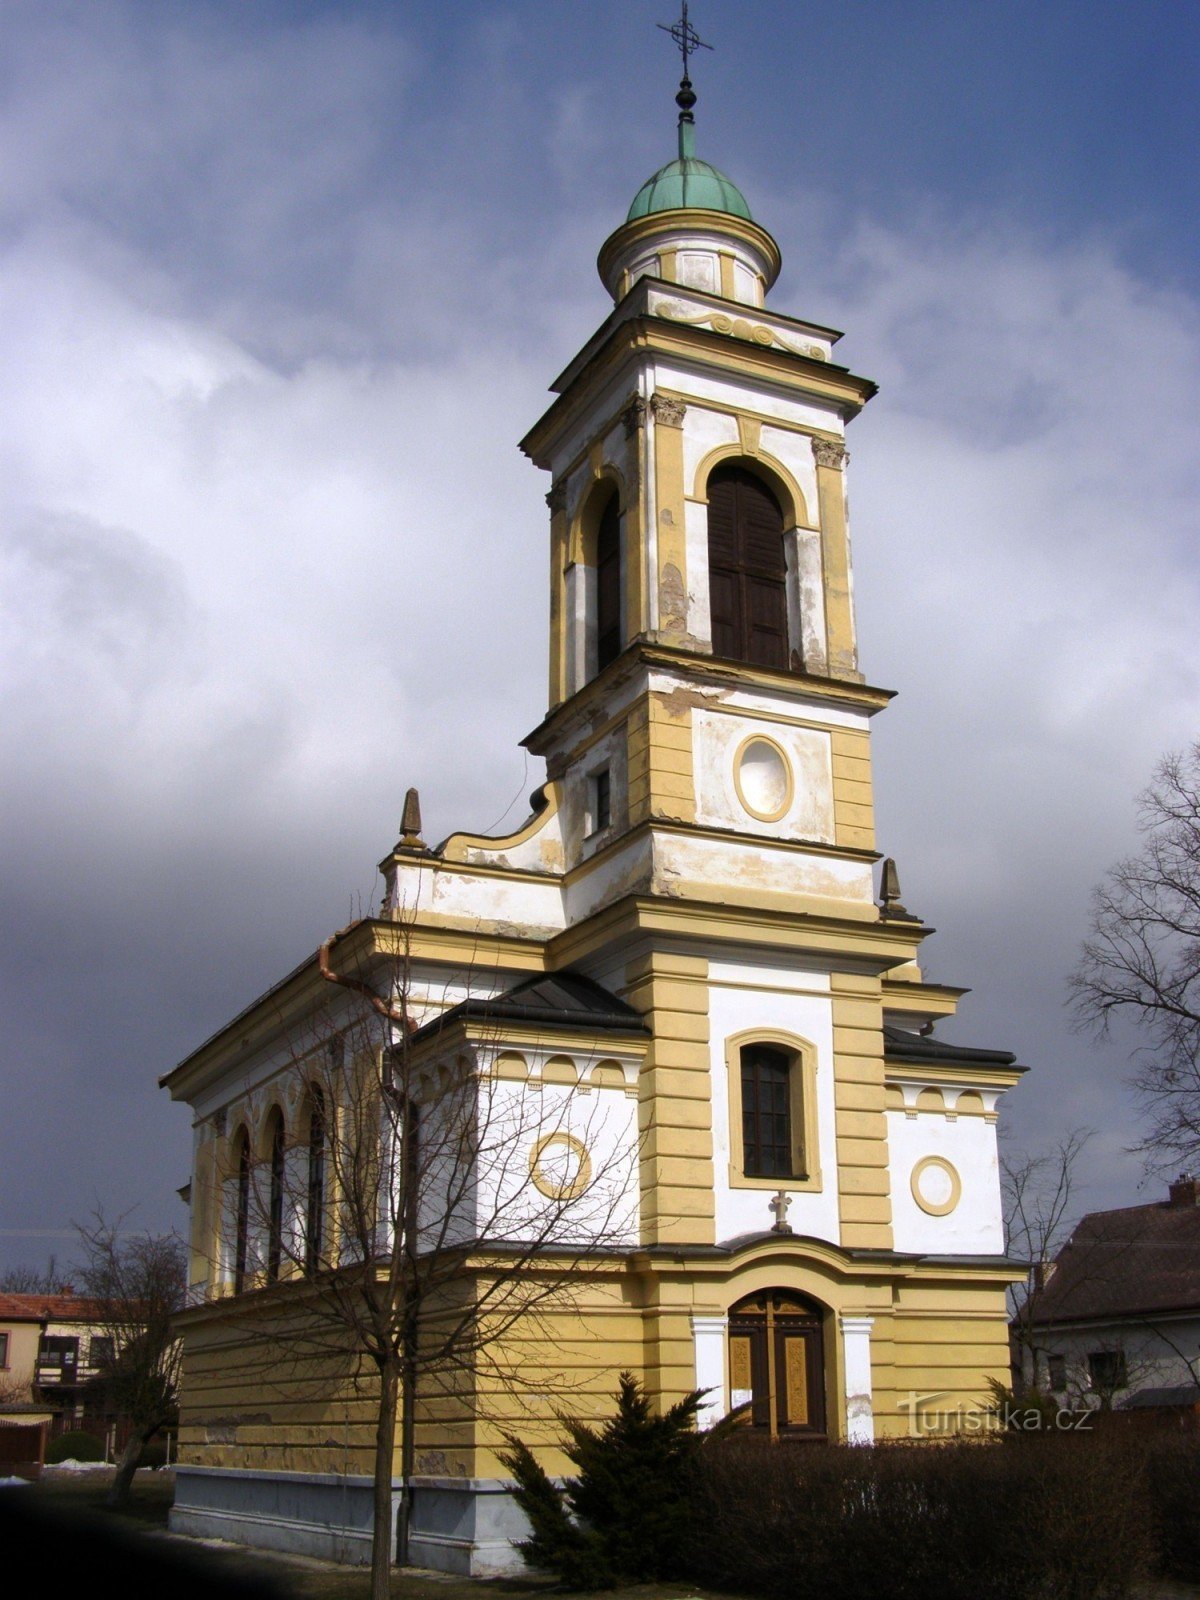 Lhota pod Libčany - Den Hellige Treenigheds kapel